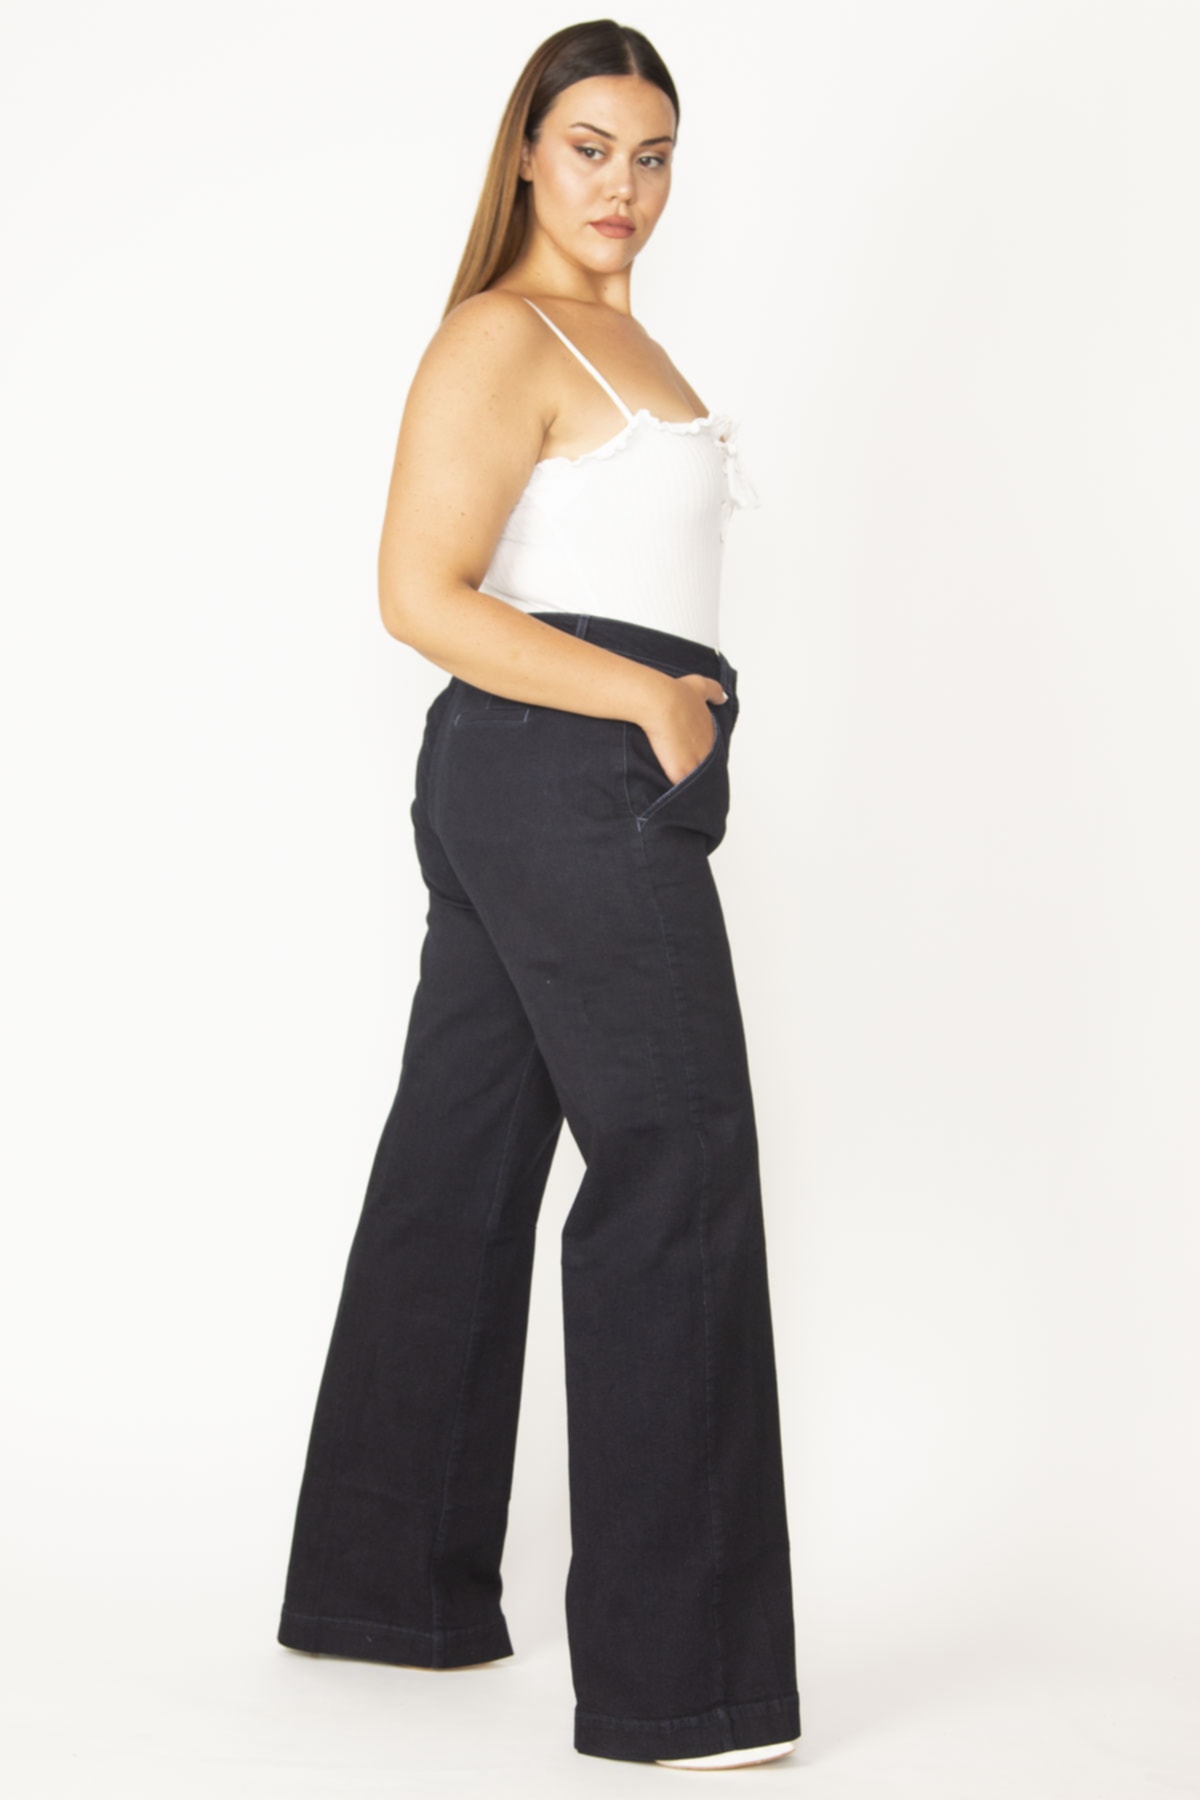 Şans Women's Plus Size Navy Blue Classic Cut Jeans with Side Pockets